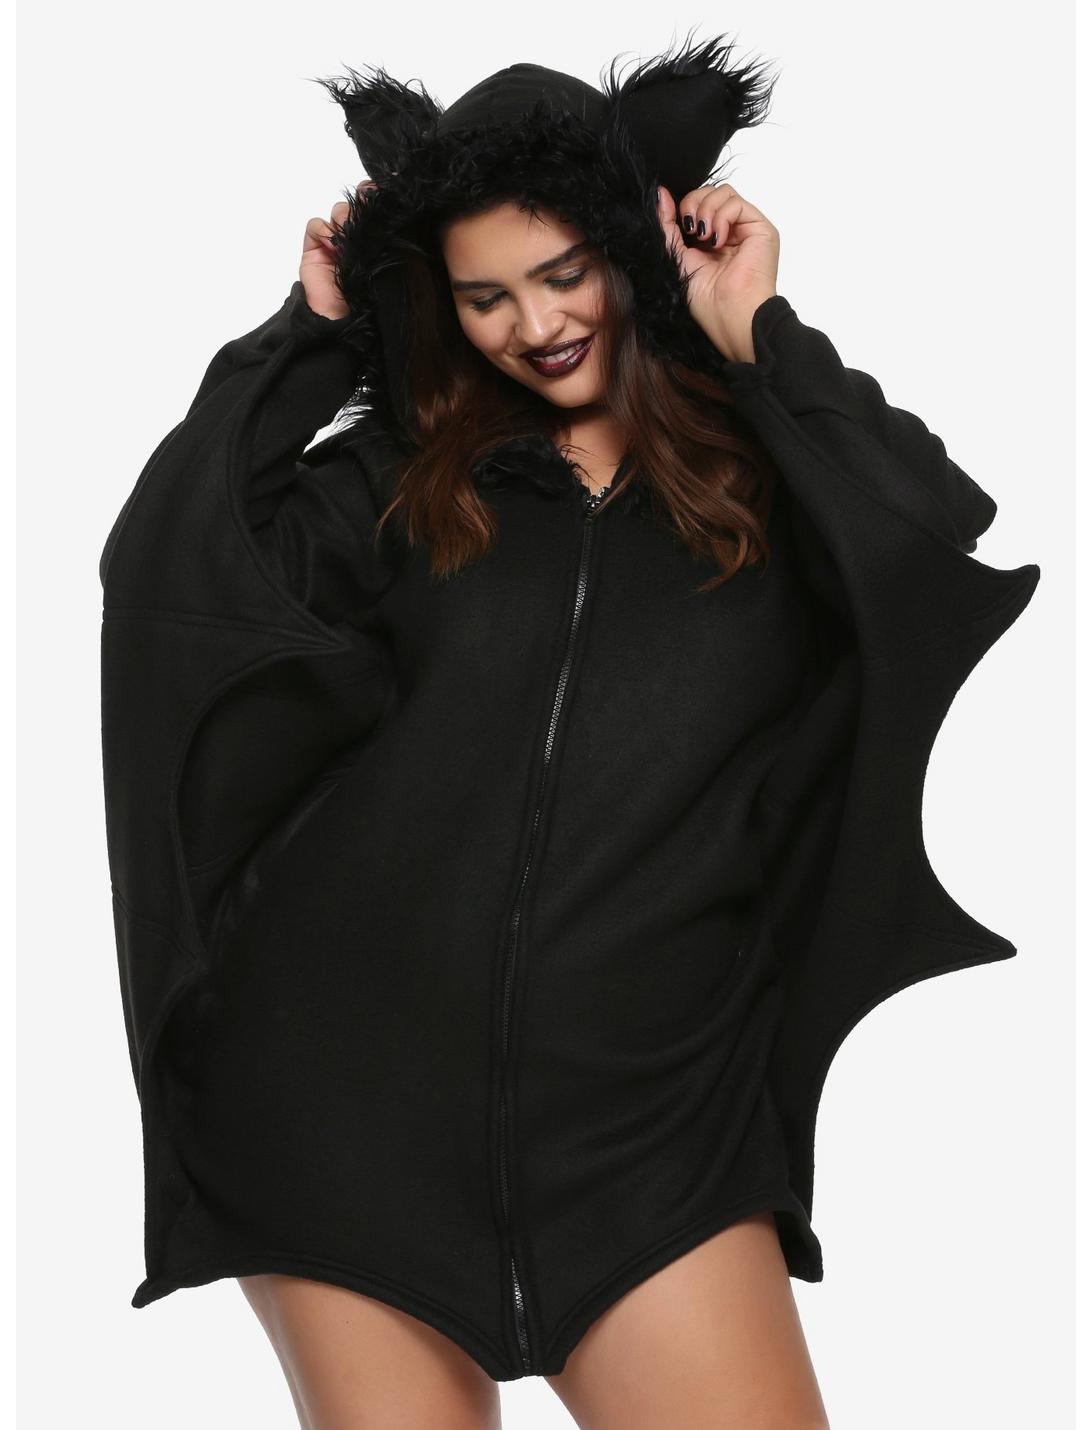 Cozy Bat Girls Costume Plus Size, BLACK, hi-res